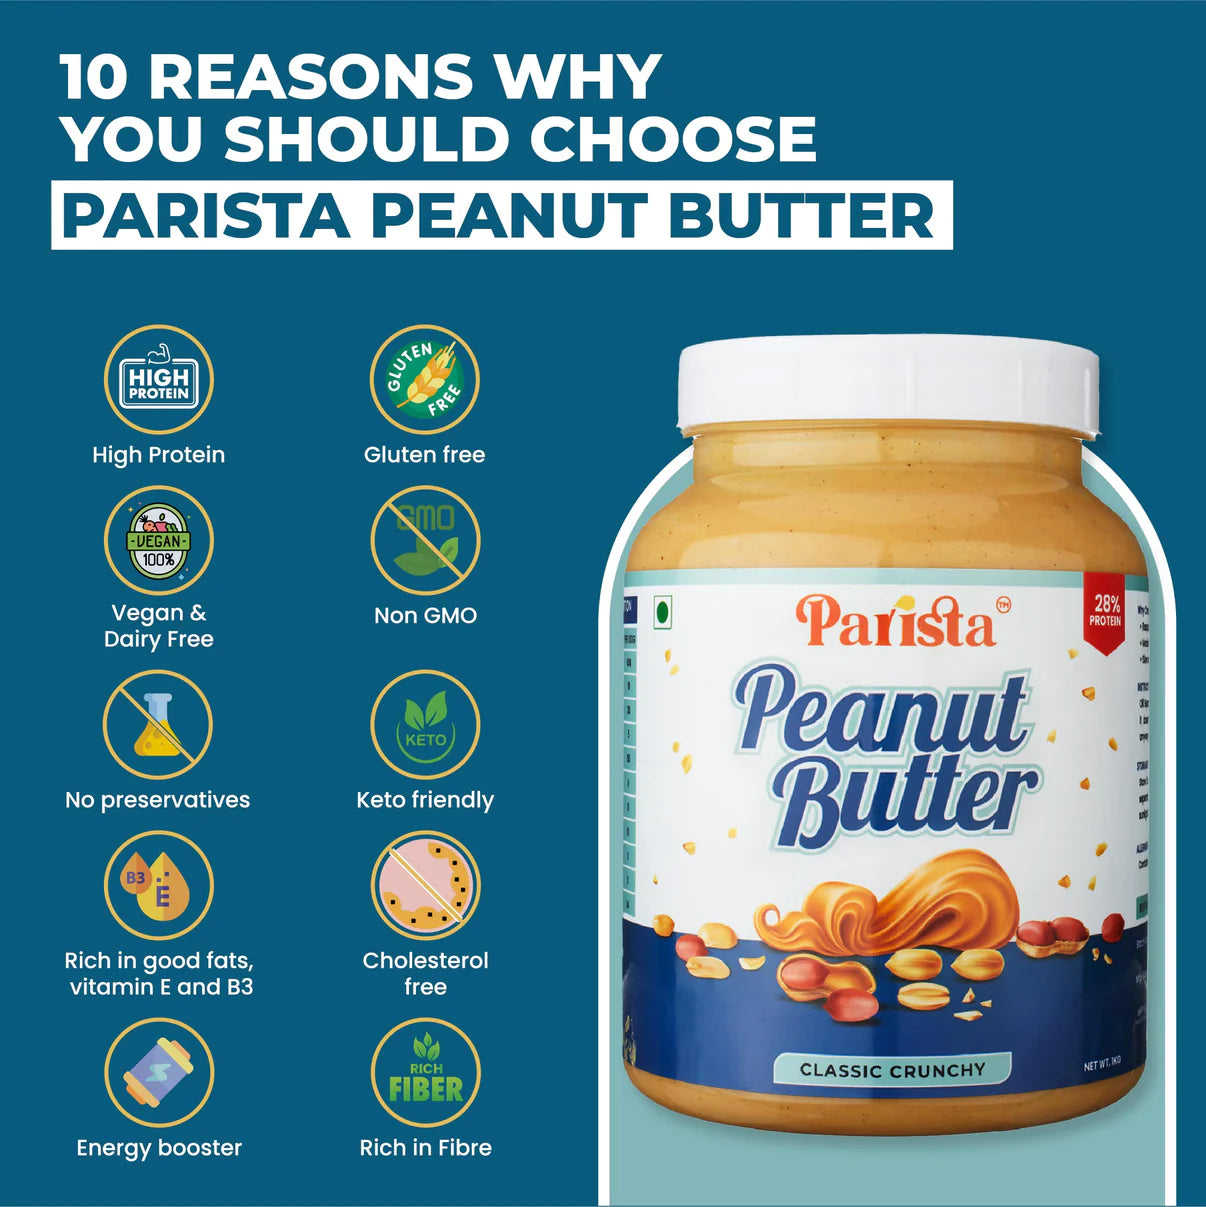 Parista Classic Peanut Butter